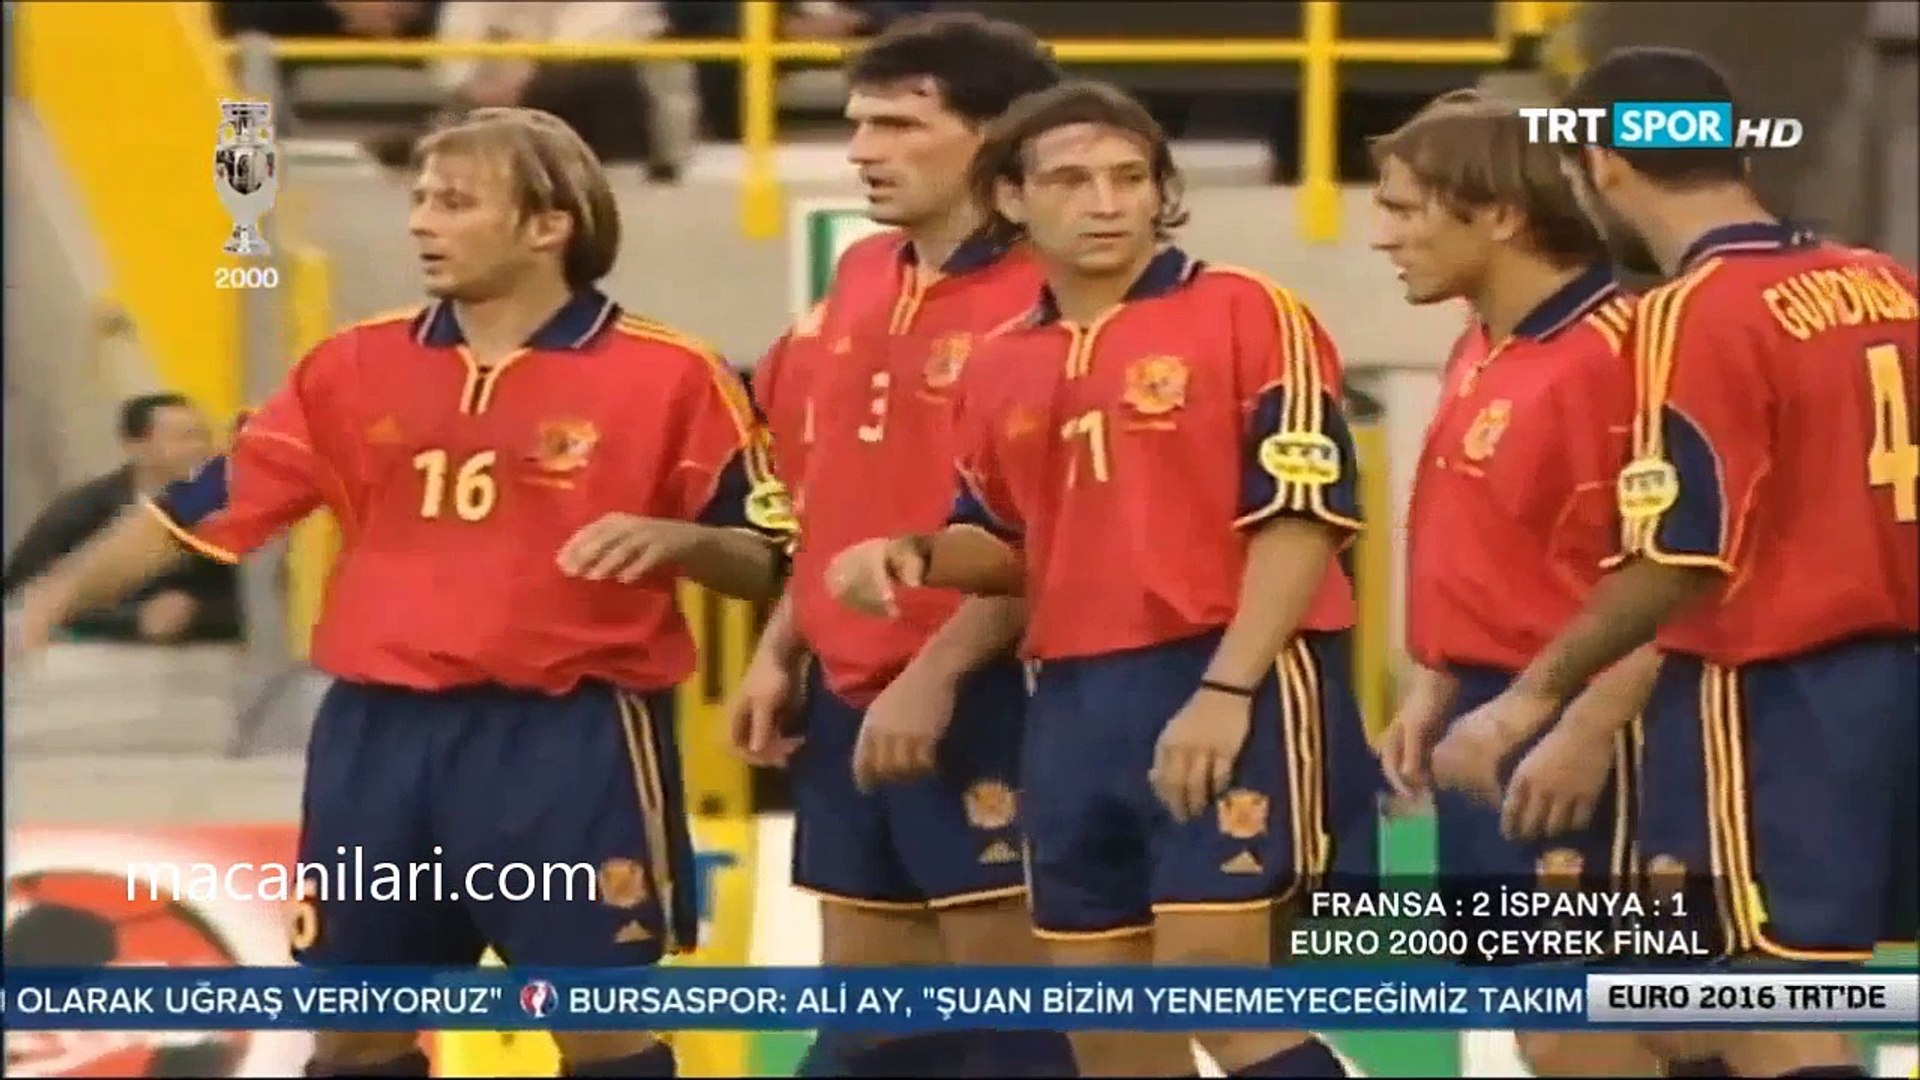 HD] 25.06.2000 - UEFA EURO 2000 Quarter Final - Avrupa Futbol Şampiyonası  İspanya 1-2 Fransa - Dailymotion Video